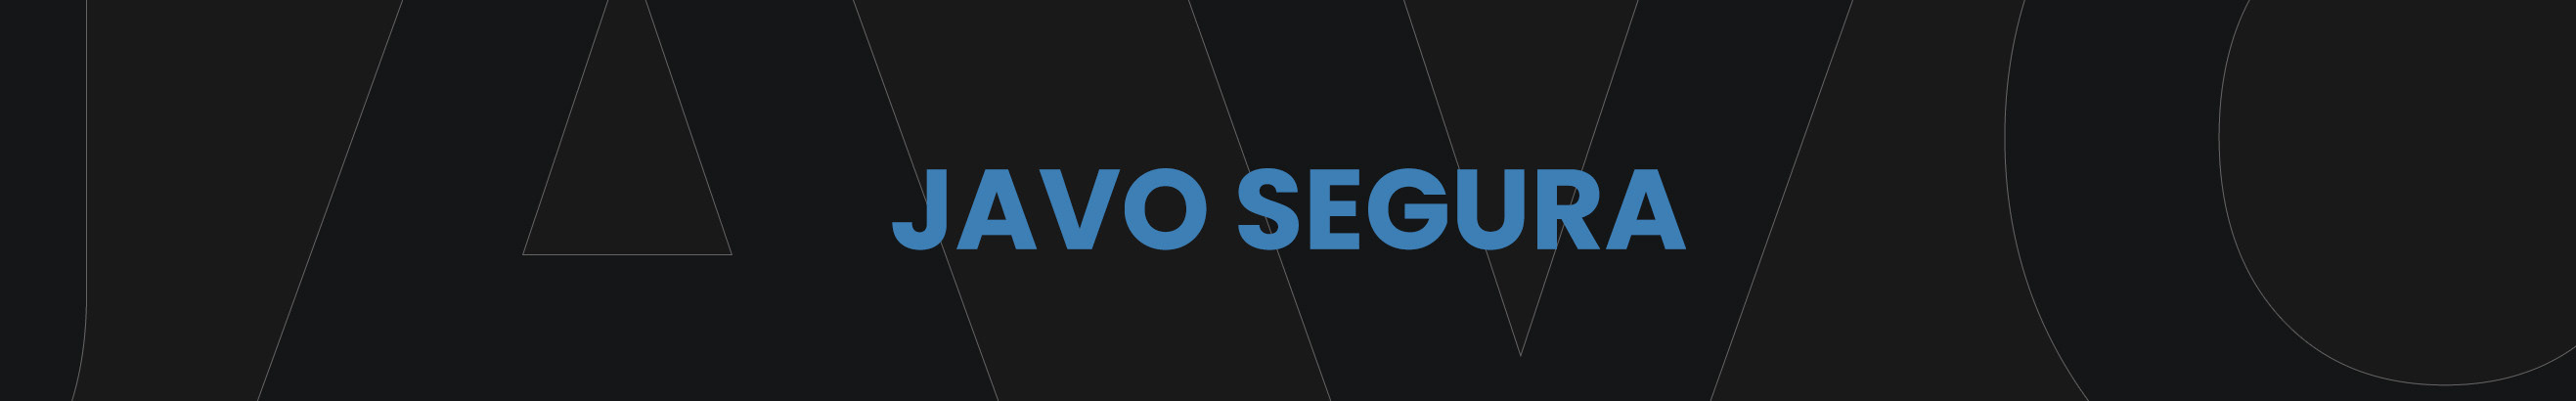 Javo Segura's profile banner